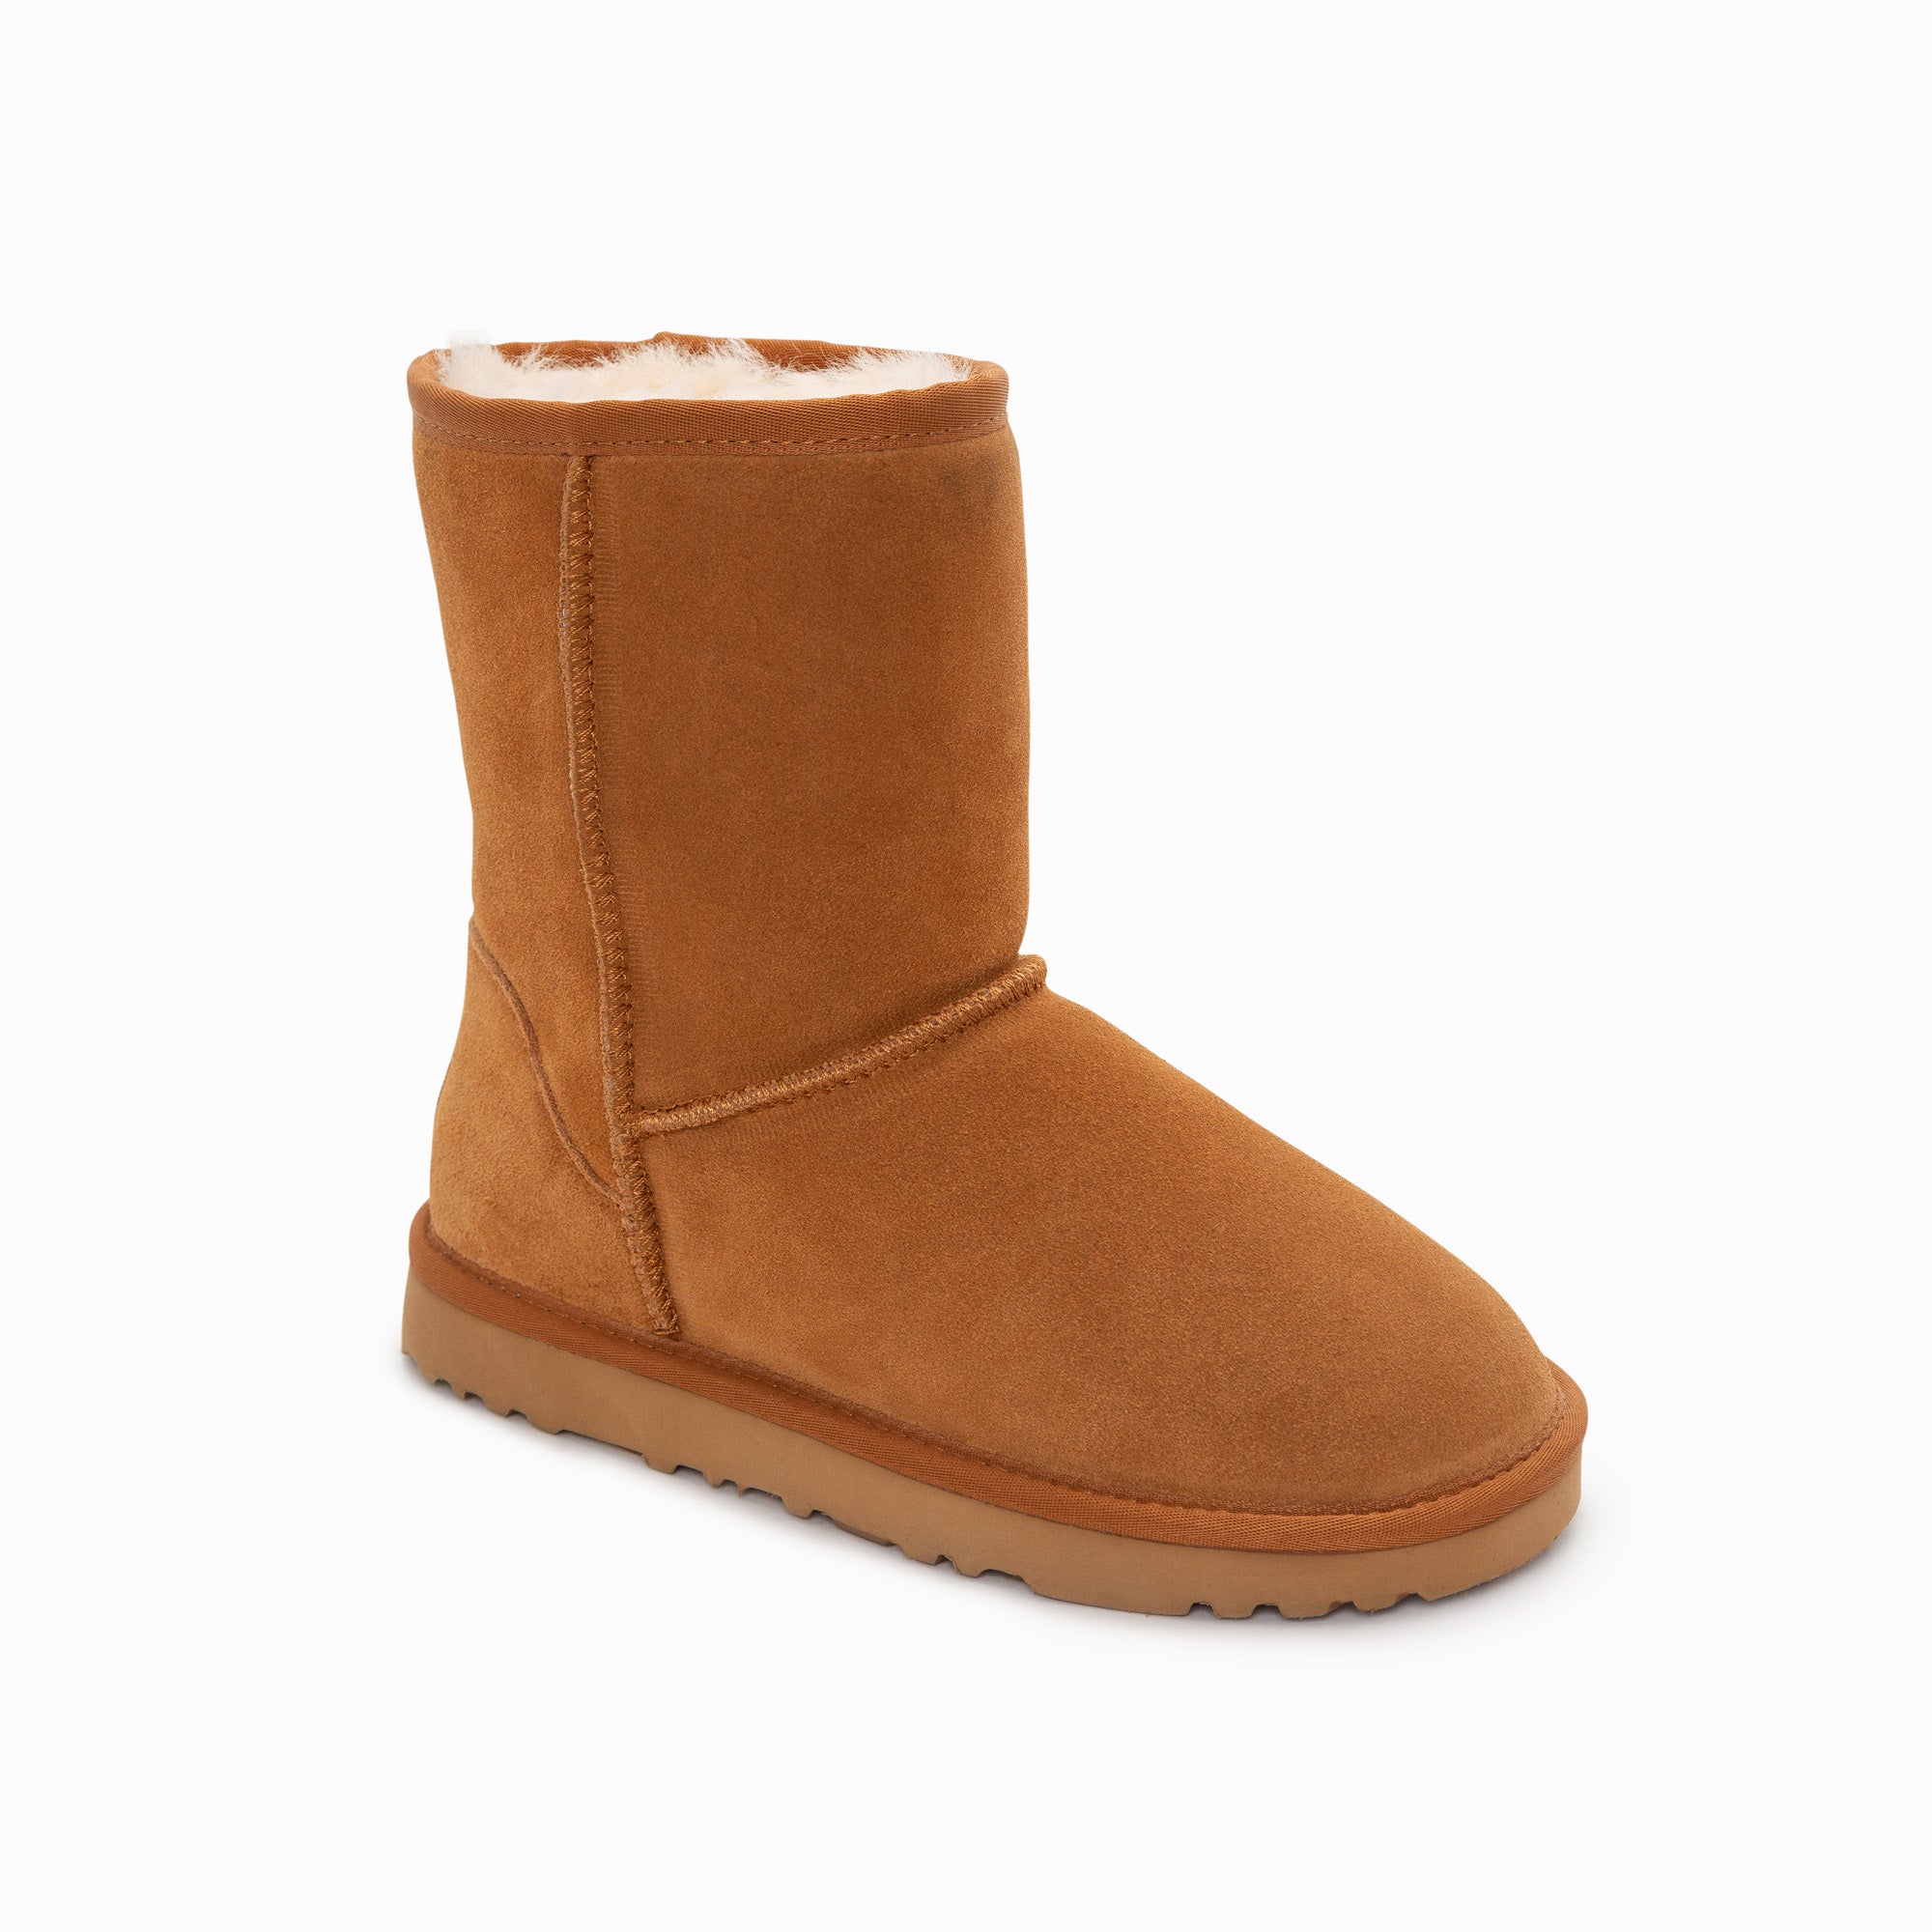 Ugg Boots Genuine Australian Sheepskin Unisex Short Classic Suede (Chestnut, EU37)